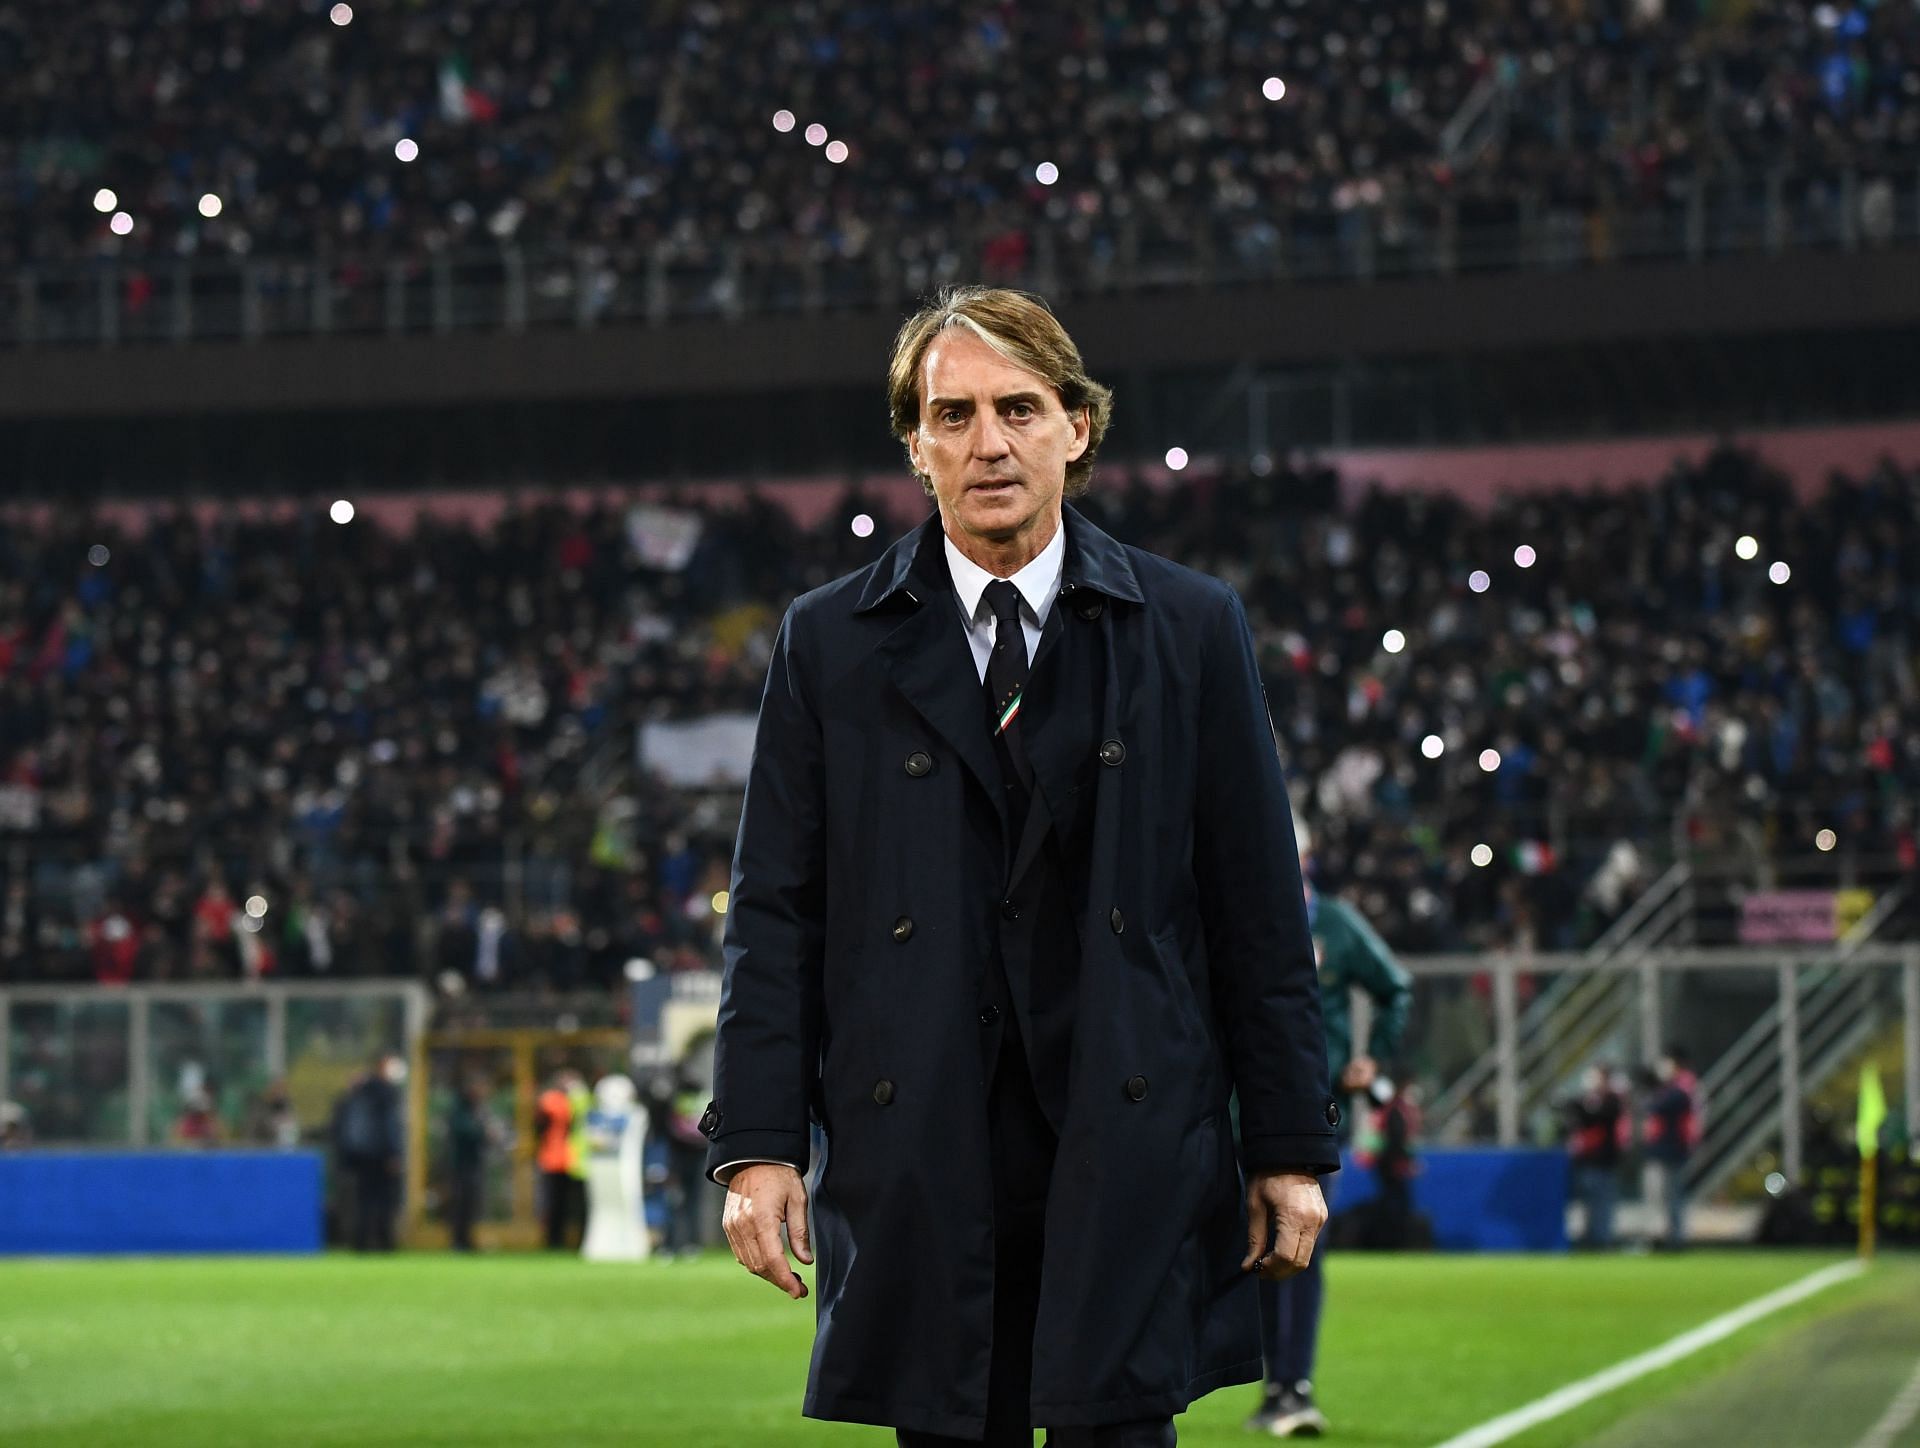 Roberto Mancini has kept the Italian team on the right track